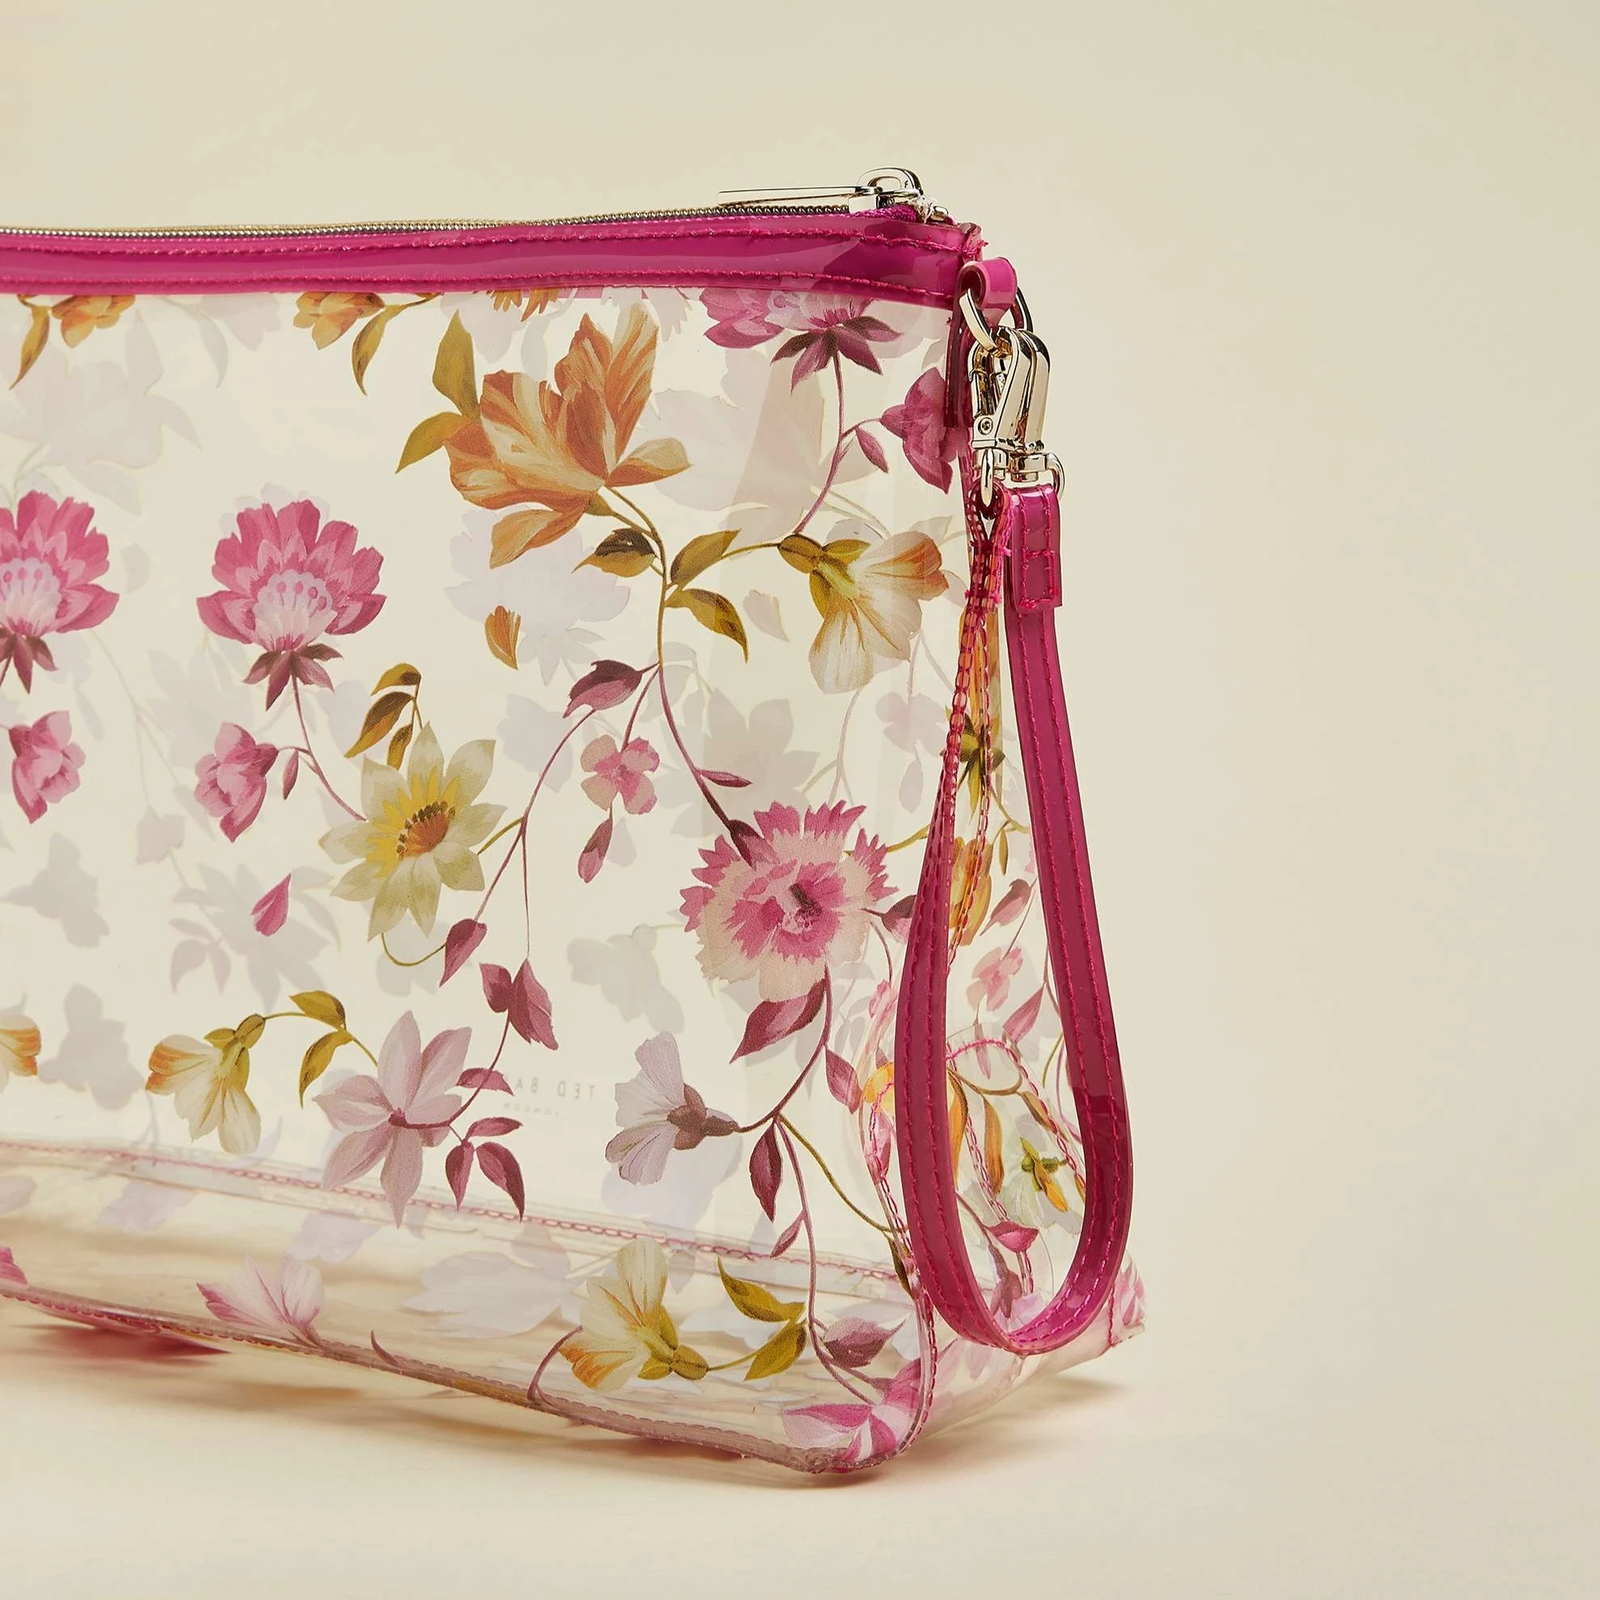 Women's Pink Ted Baker Handbags